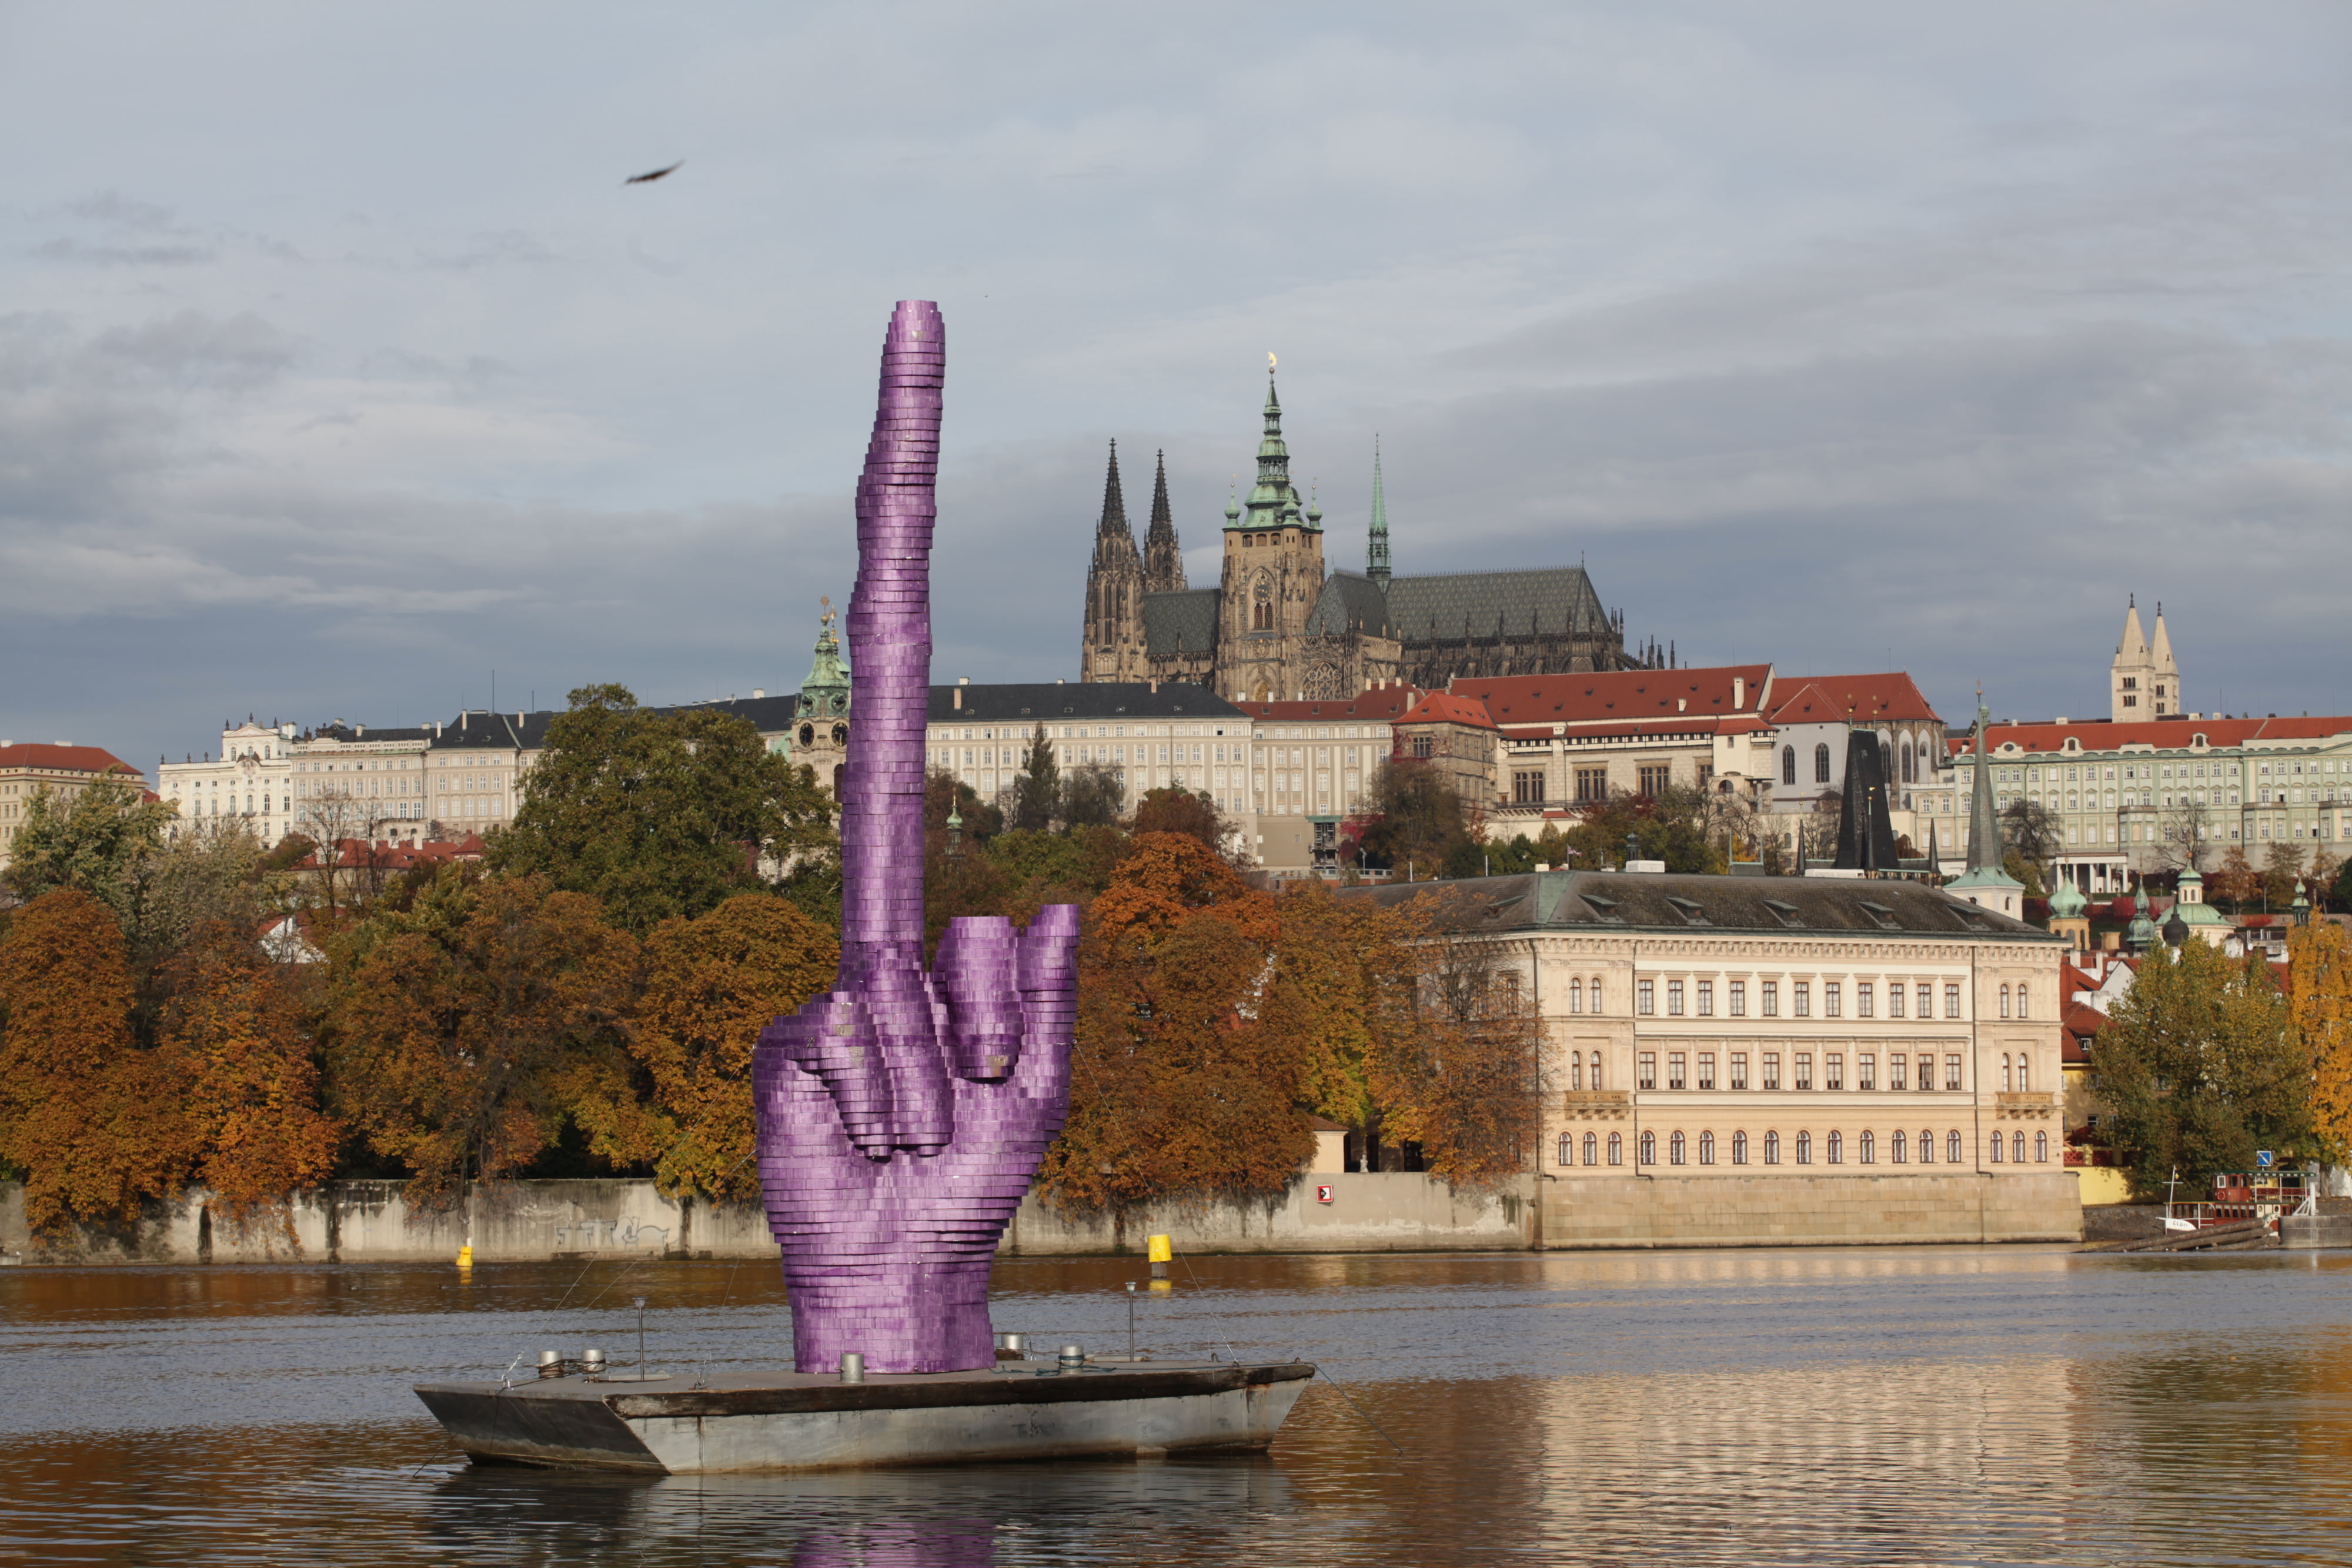 Czech artist David Černý aims giant middle finger at Prague Palace